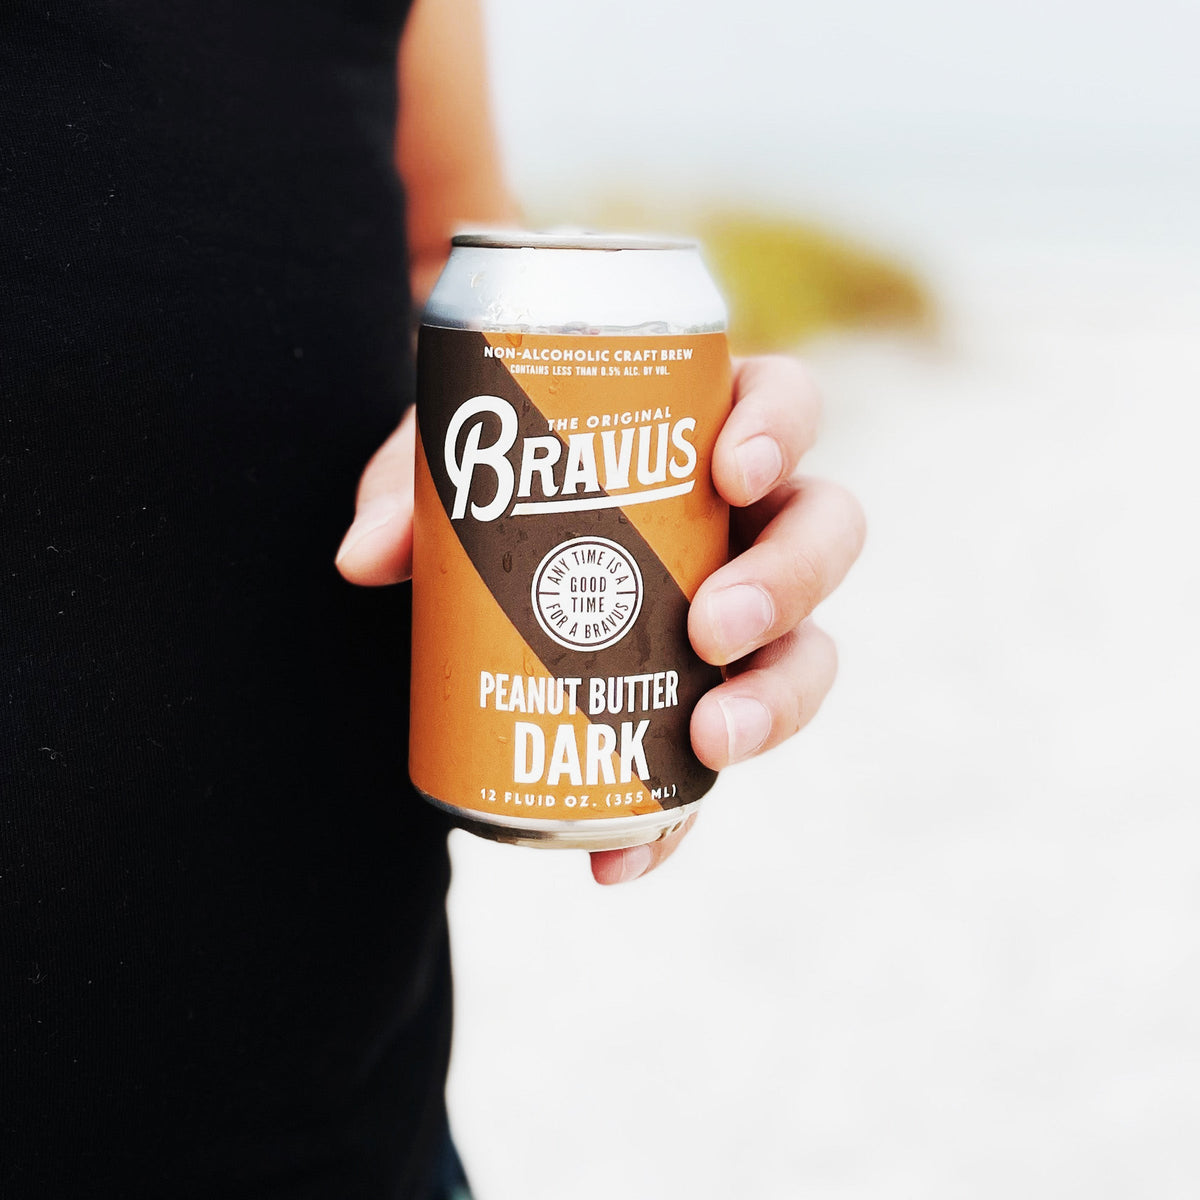 Peanut Butter Dark by Bravus Brewing Company